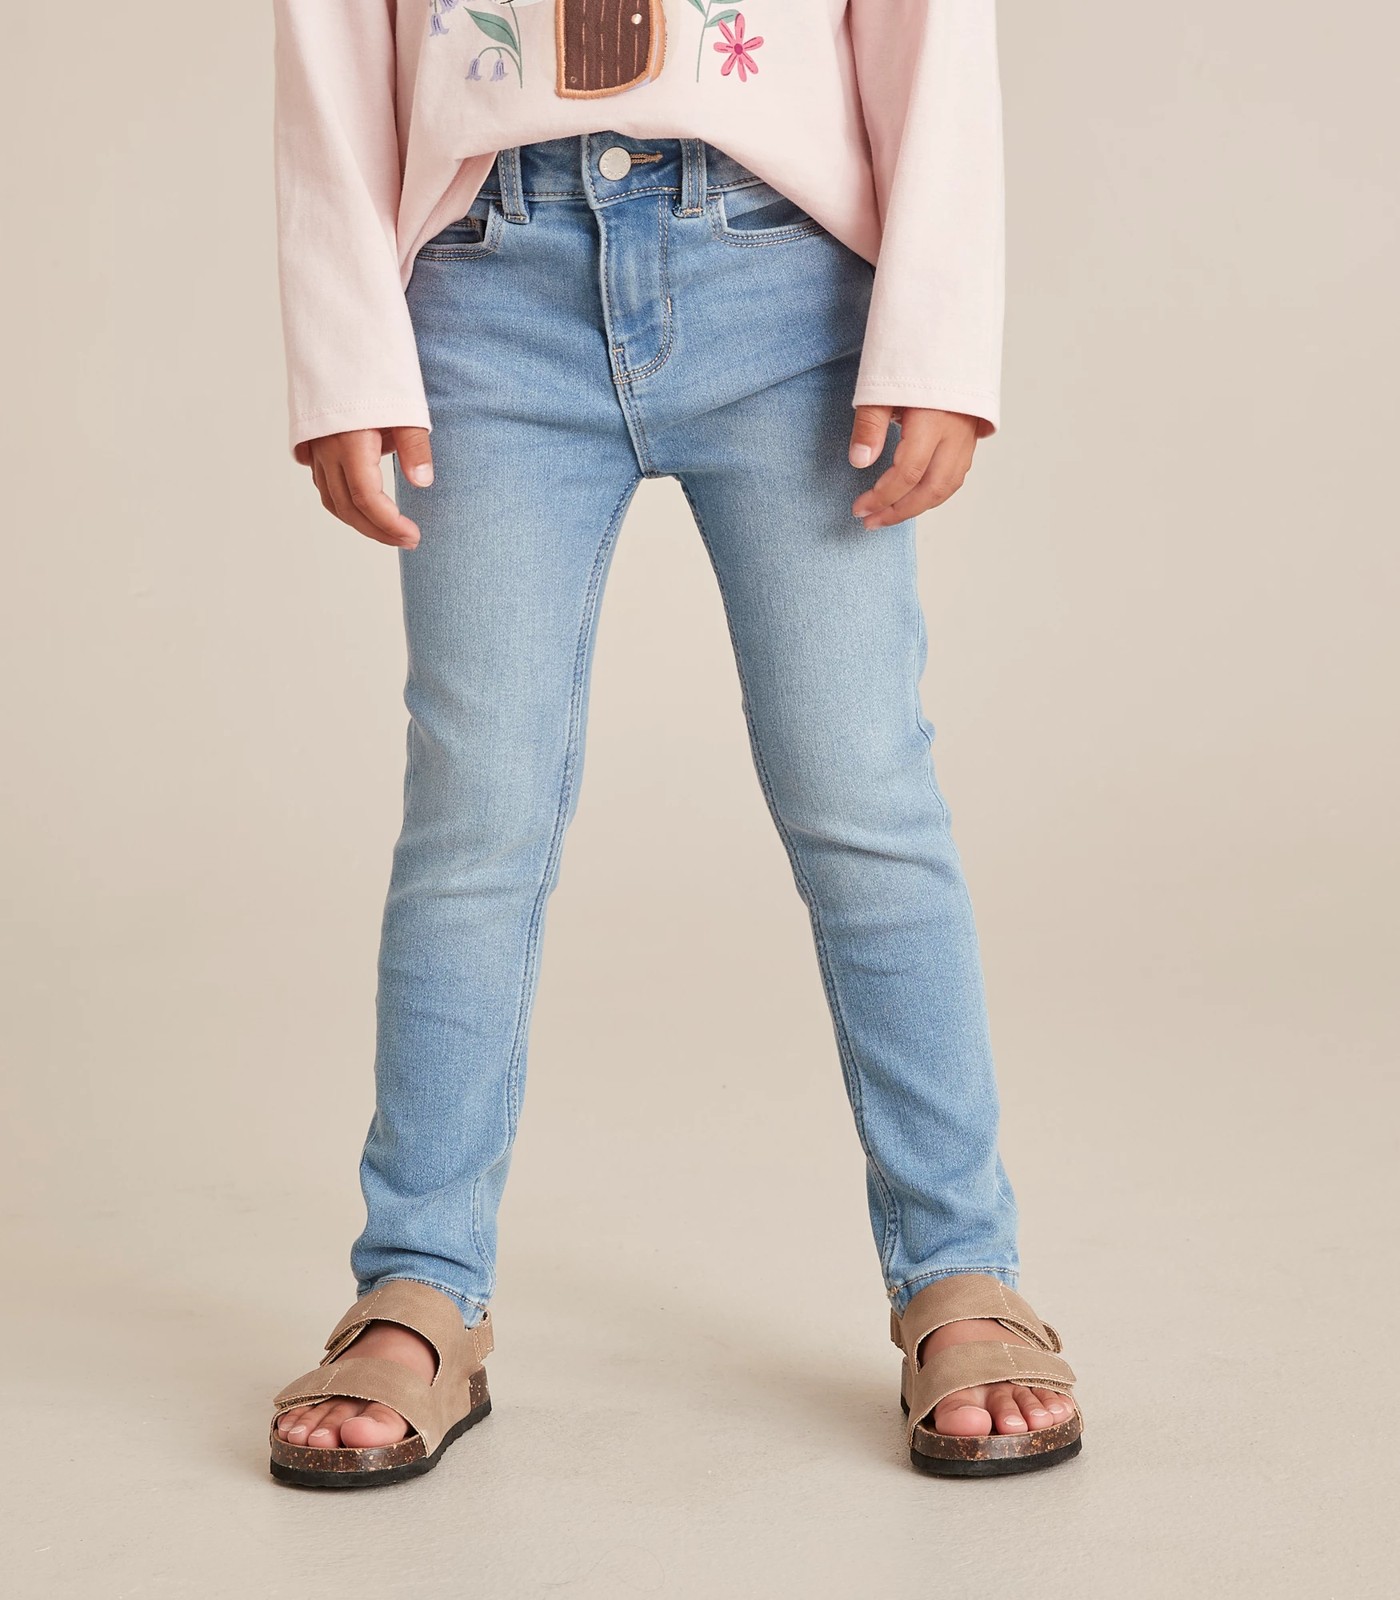 Denim Jnr Sophie Fitted Jeans | Target Australia